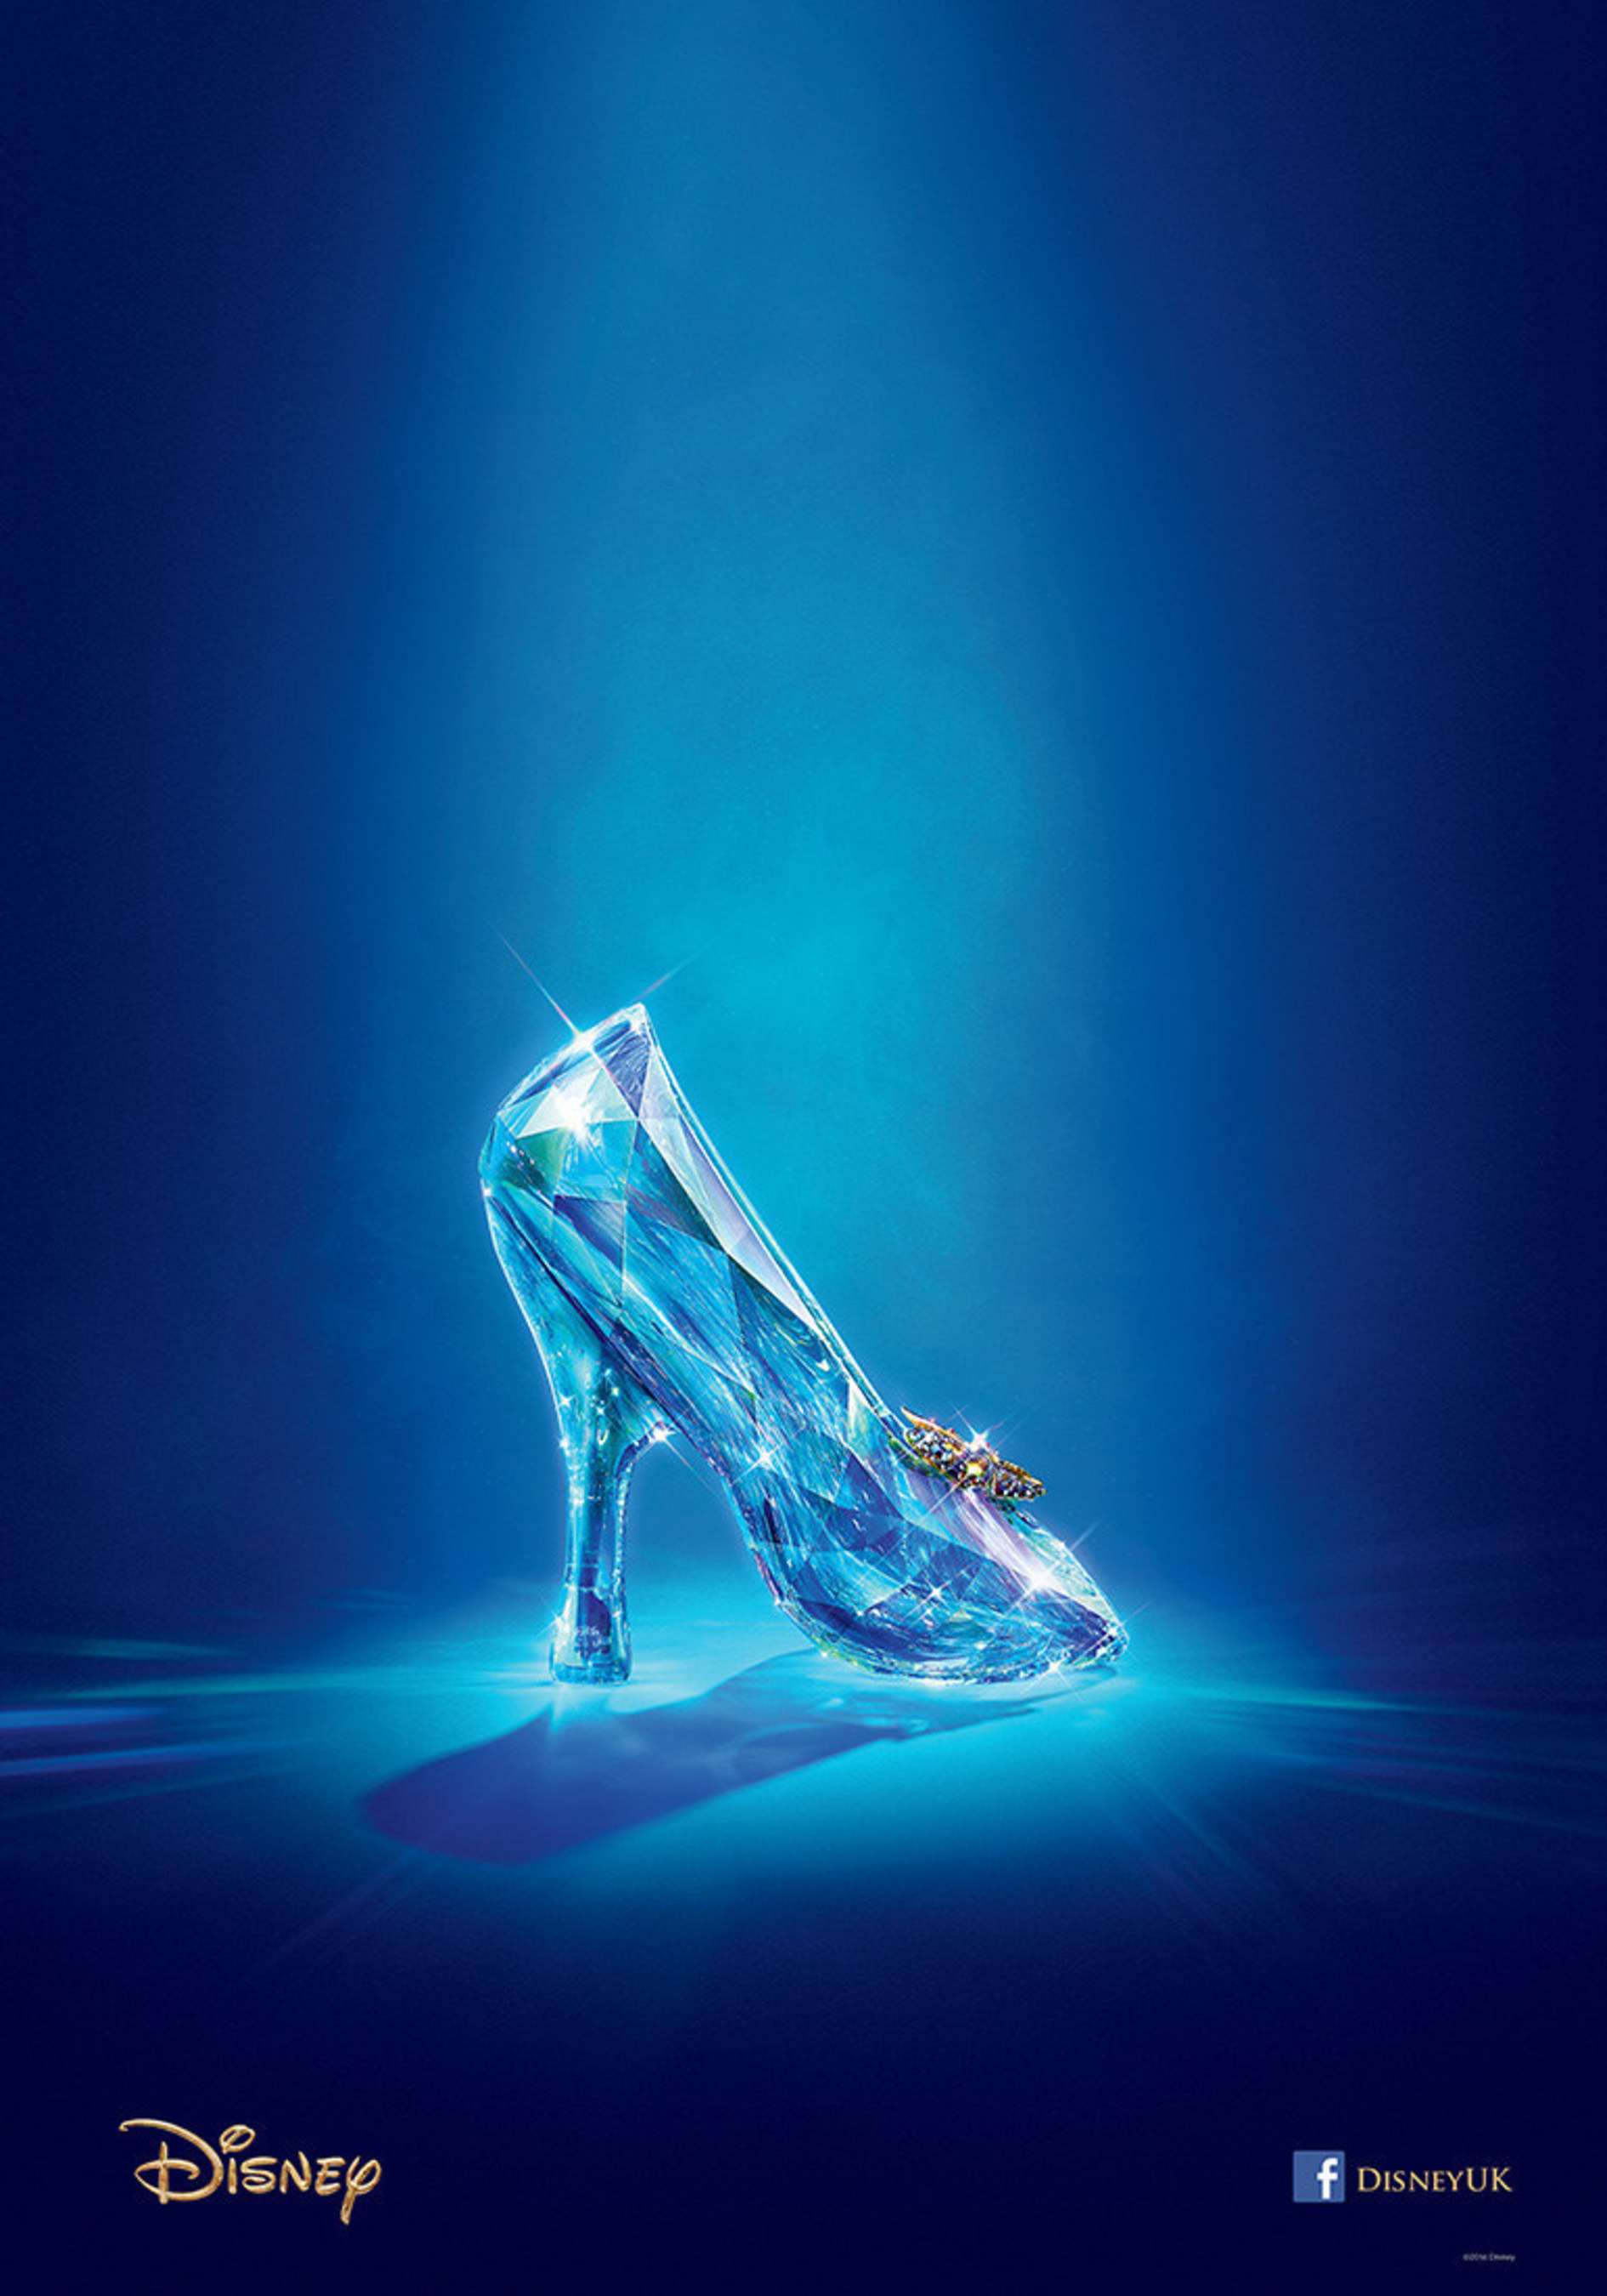 Cinderella slippers (c) 2014 Disney Enterprises, Inc. All Rights Reserved